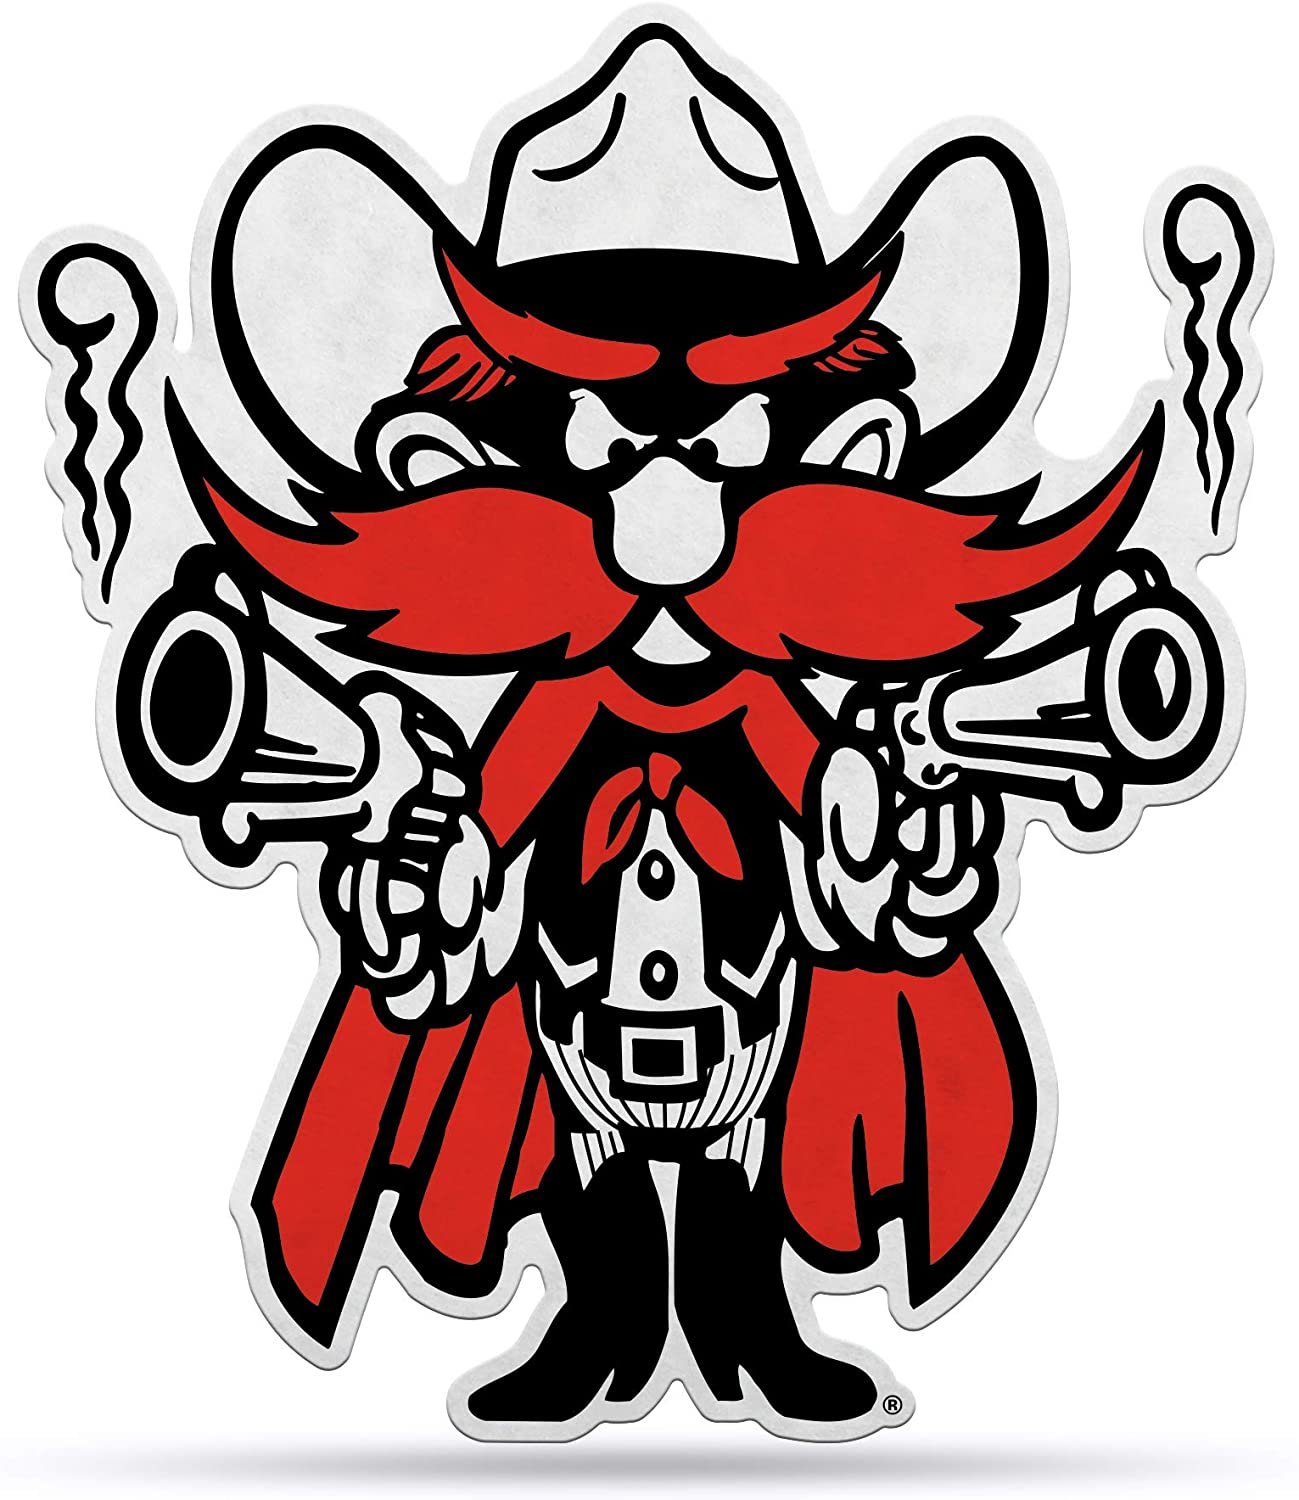 Texas Tech Red Raiders Pennant Mascot Design 18 Inch Soft Felt University of